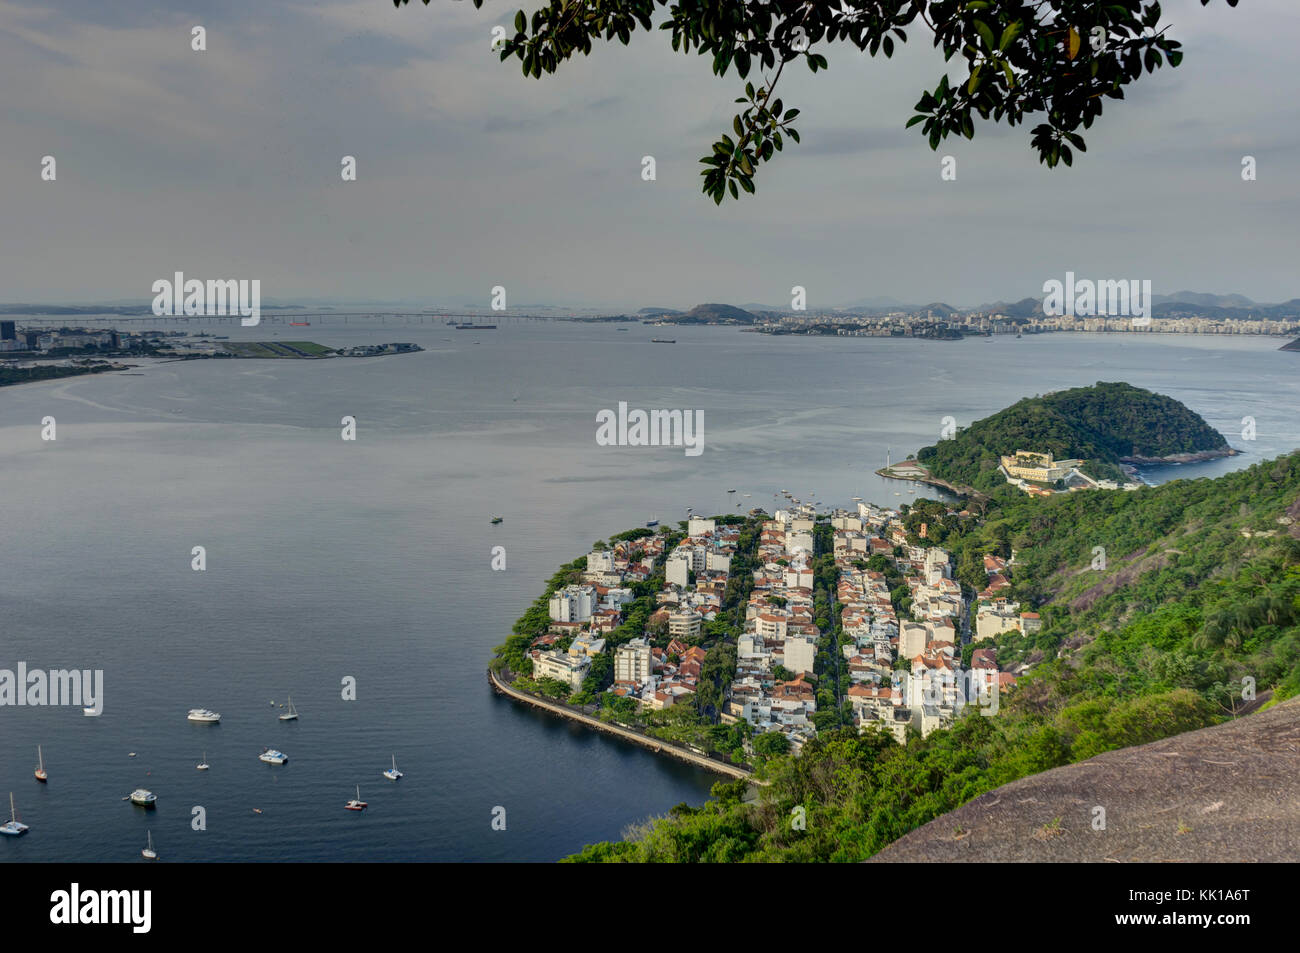 Rio de janeiro yacht club hi-res stock photography and images - Alamy